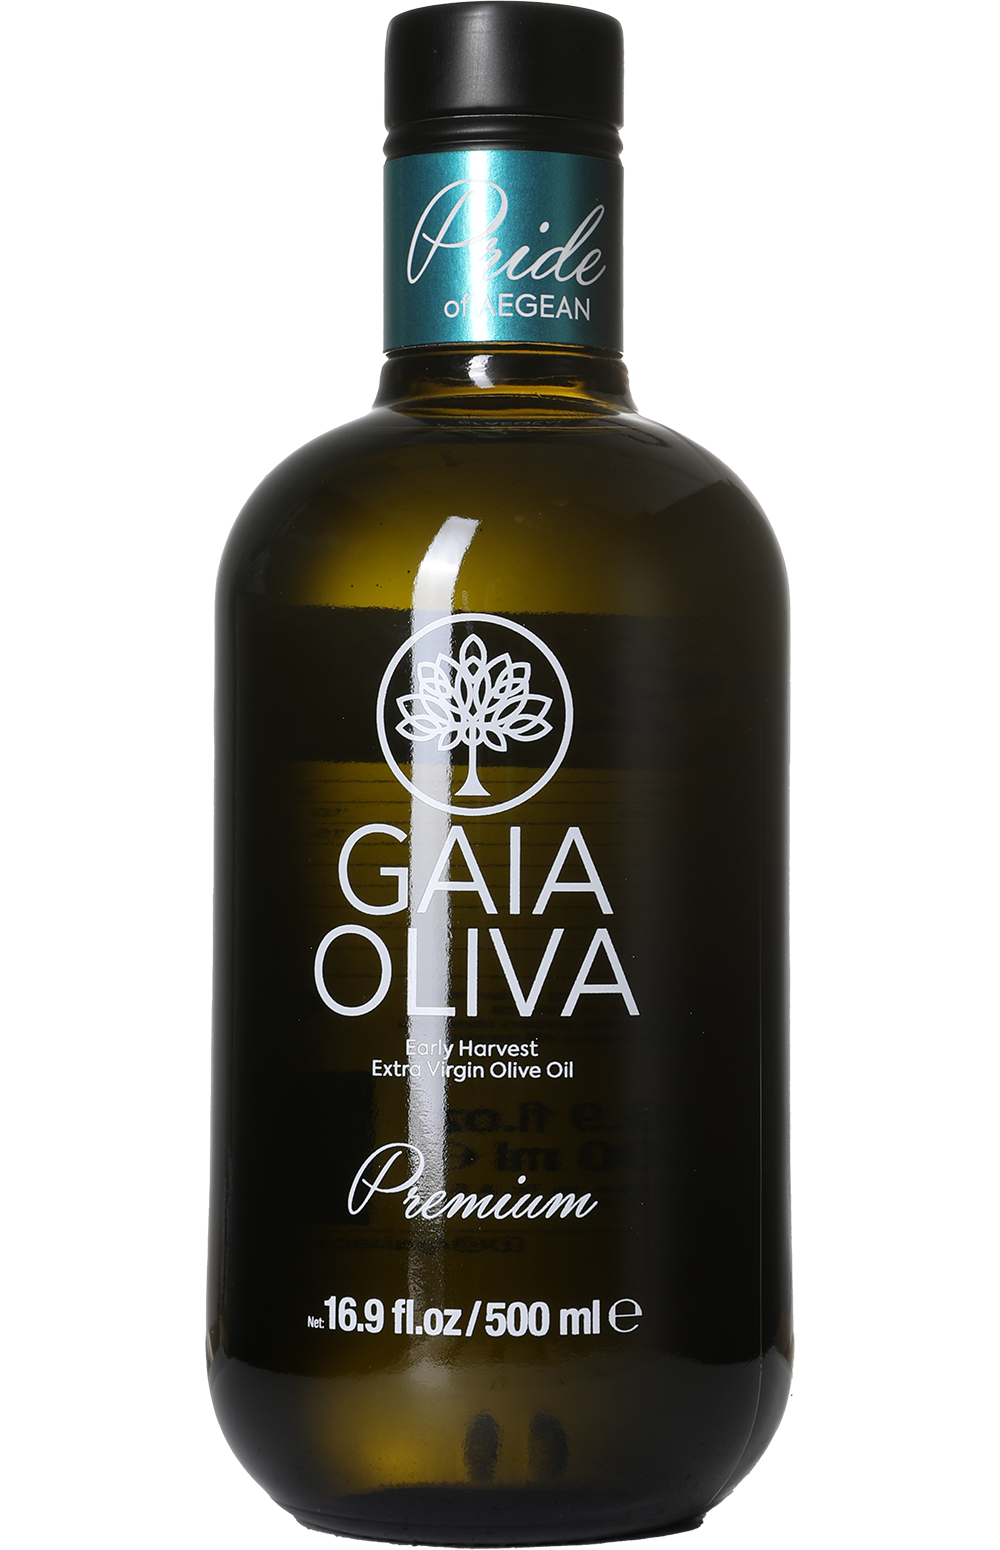 Gaia Oliva  Ltd